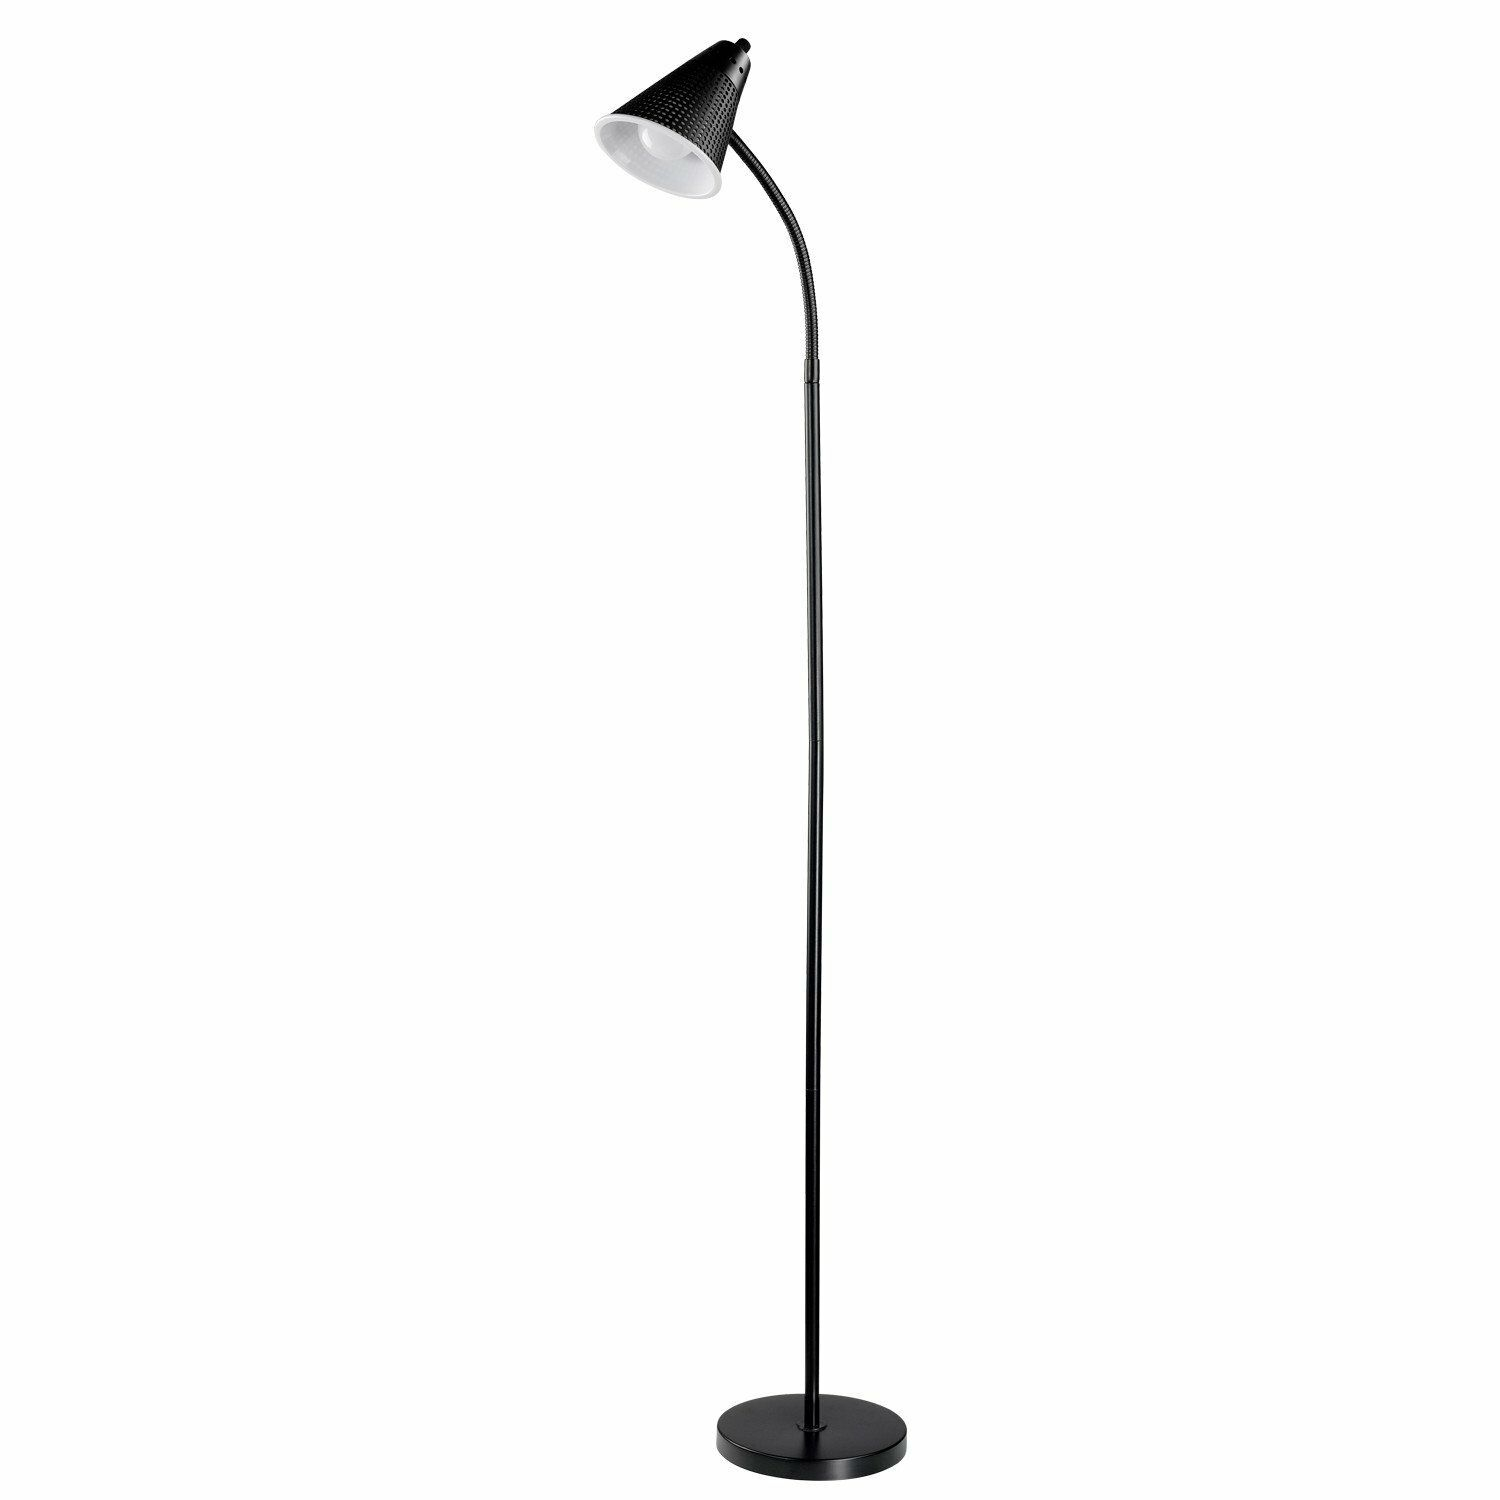 Led Reading Light Standing Floor Lamp Adjustable Gooseneck Energy Saving Black pertaining to measurements 1500 X 1500